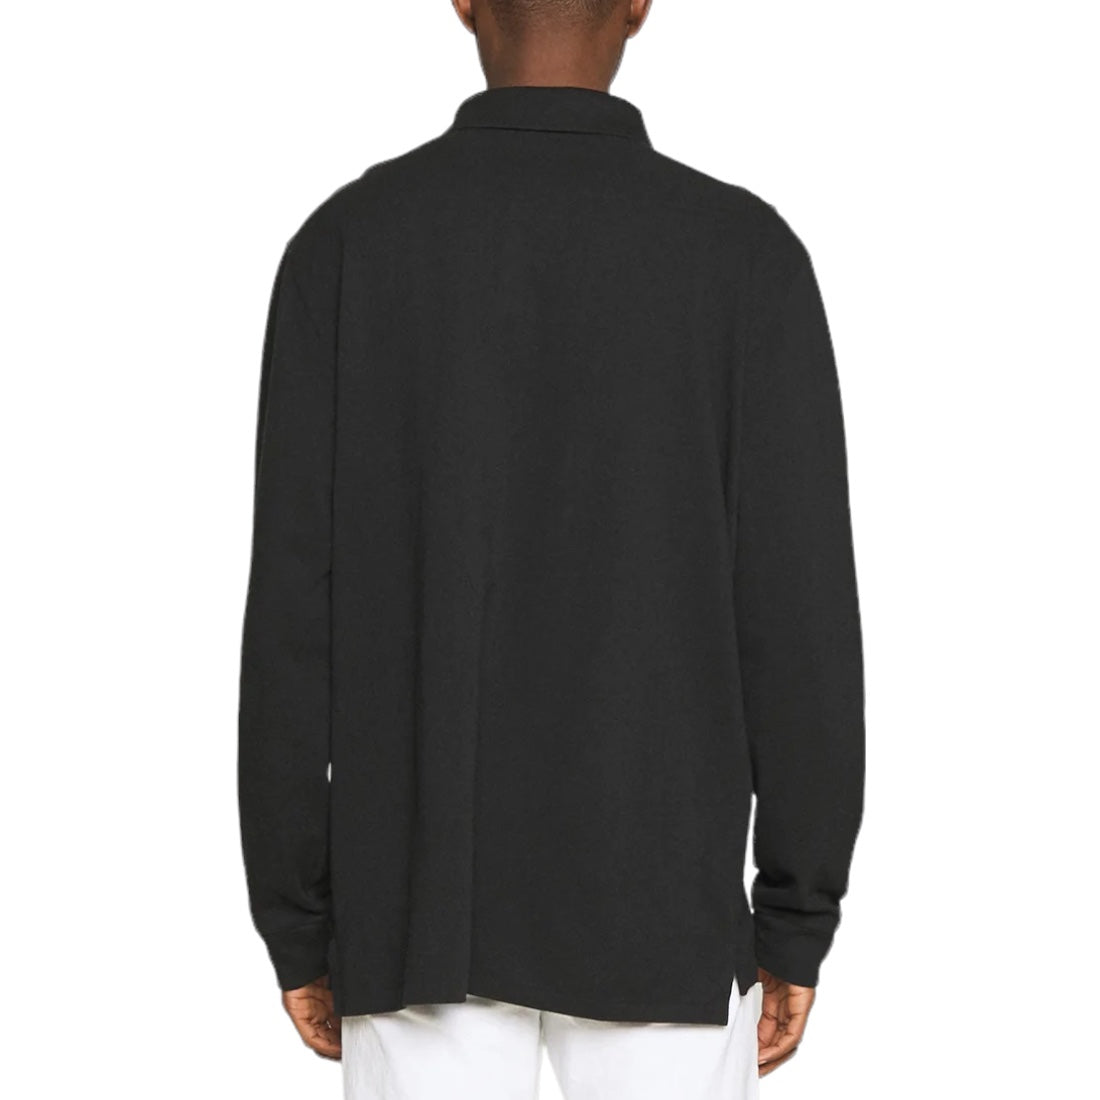 Polo Ralph Lauren Long Sleeves Polo Shirt